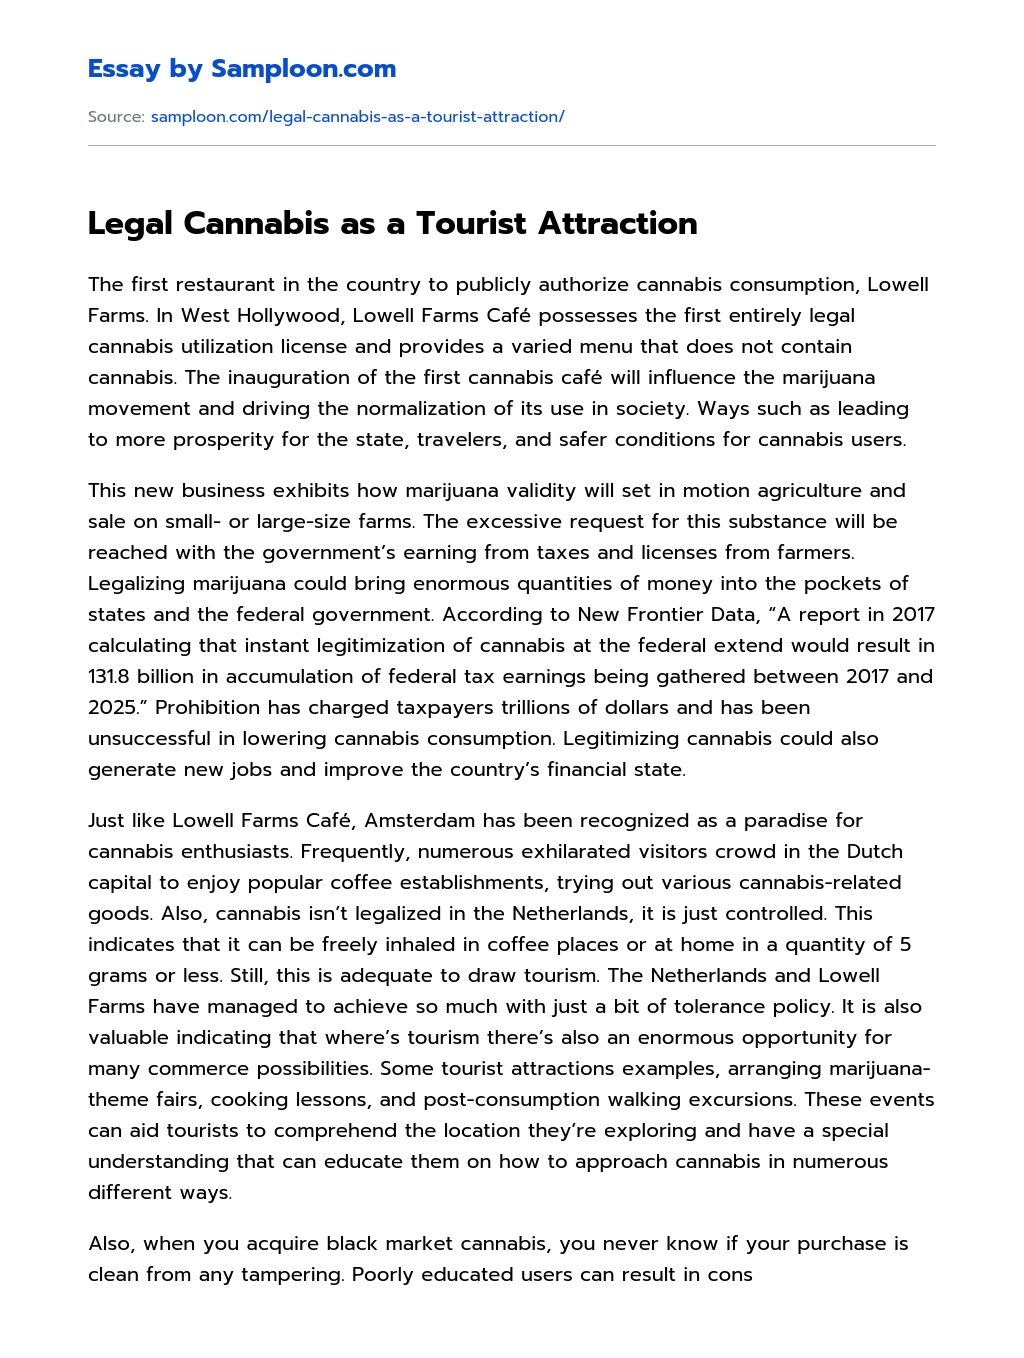 Legal Cannabis as a Tourist Attraction essay